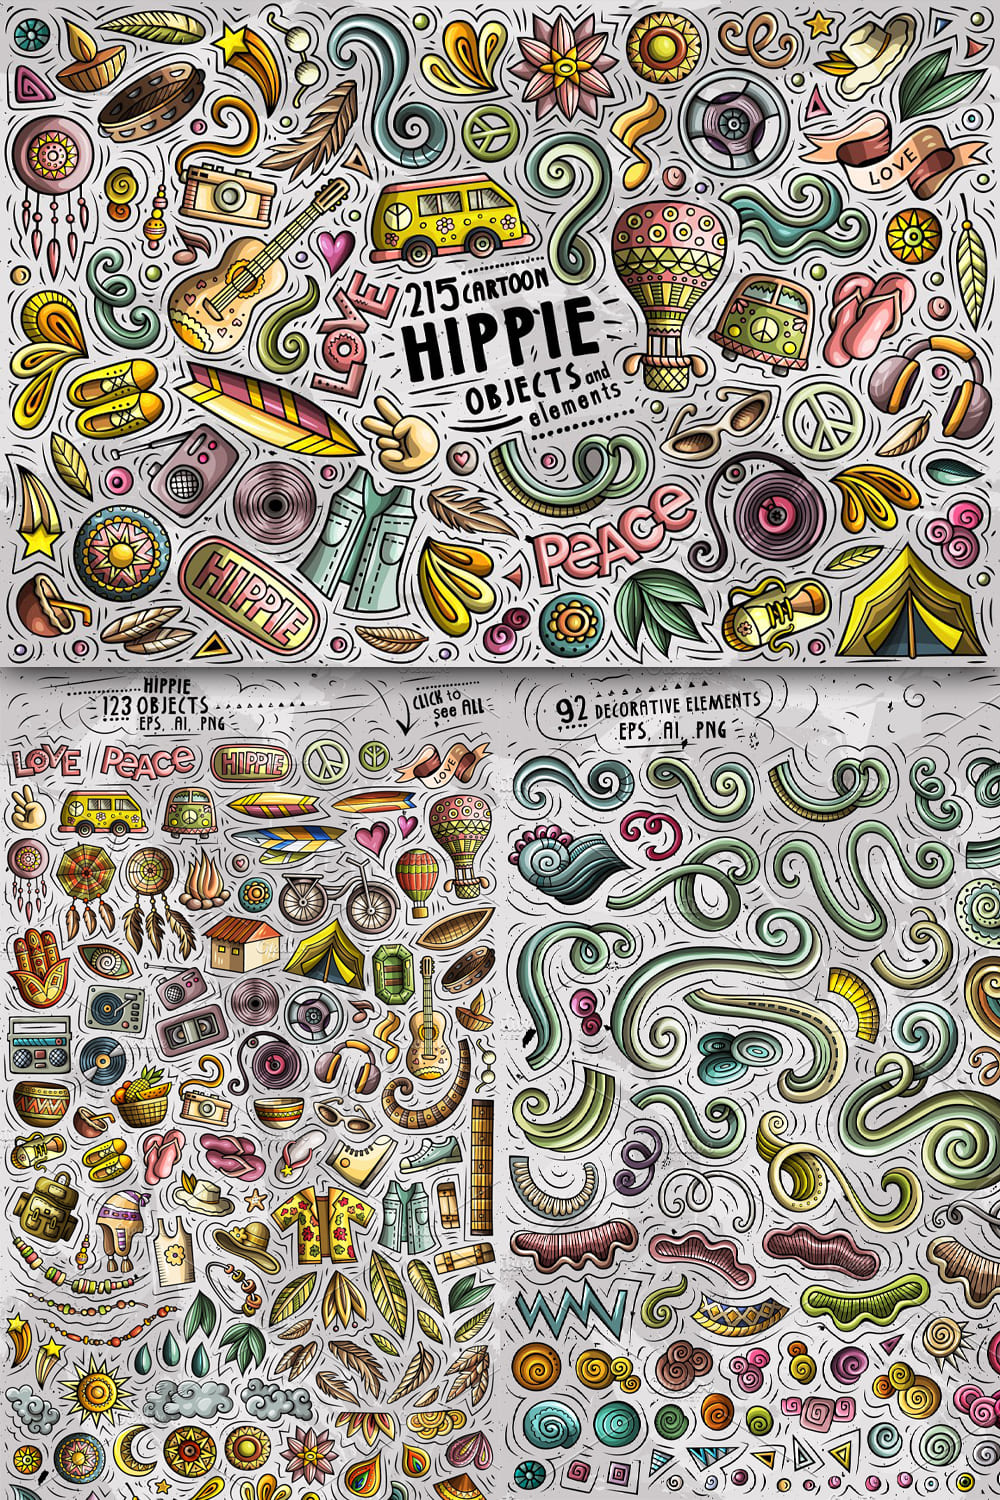 Hippie Cartoon Objects Set Pinterest 1000 1500.